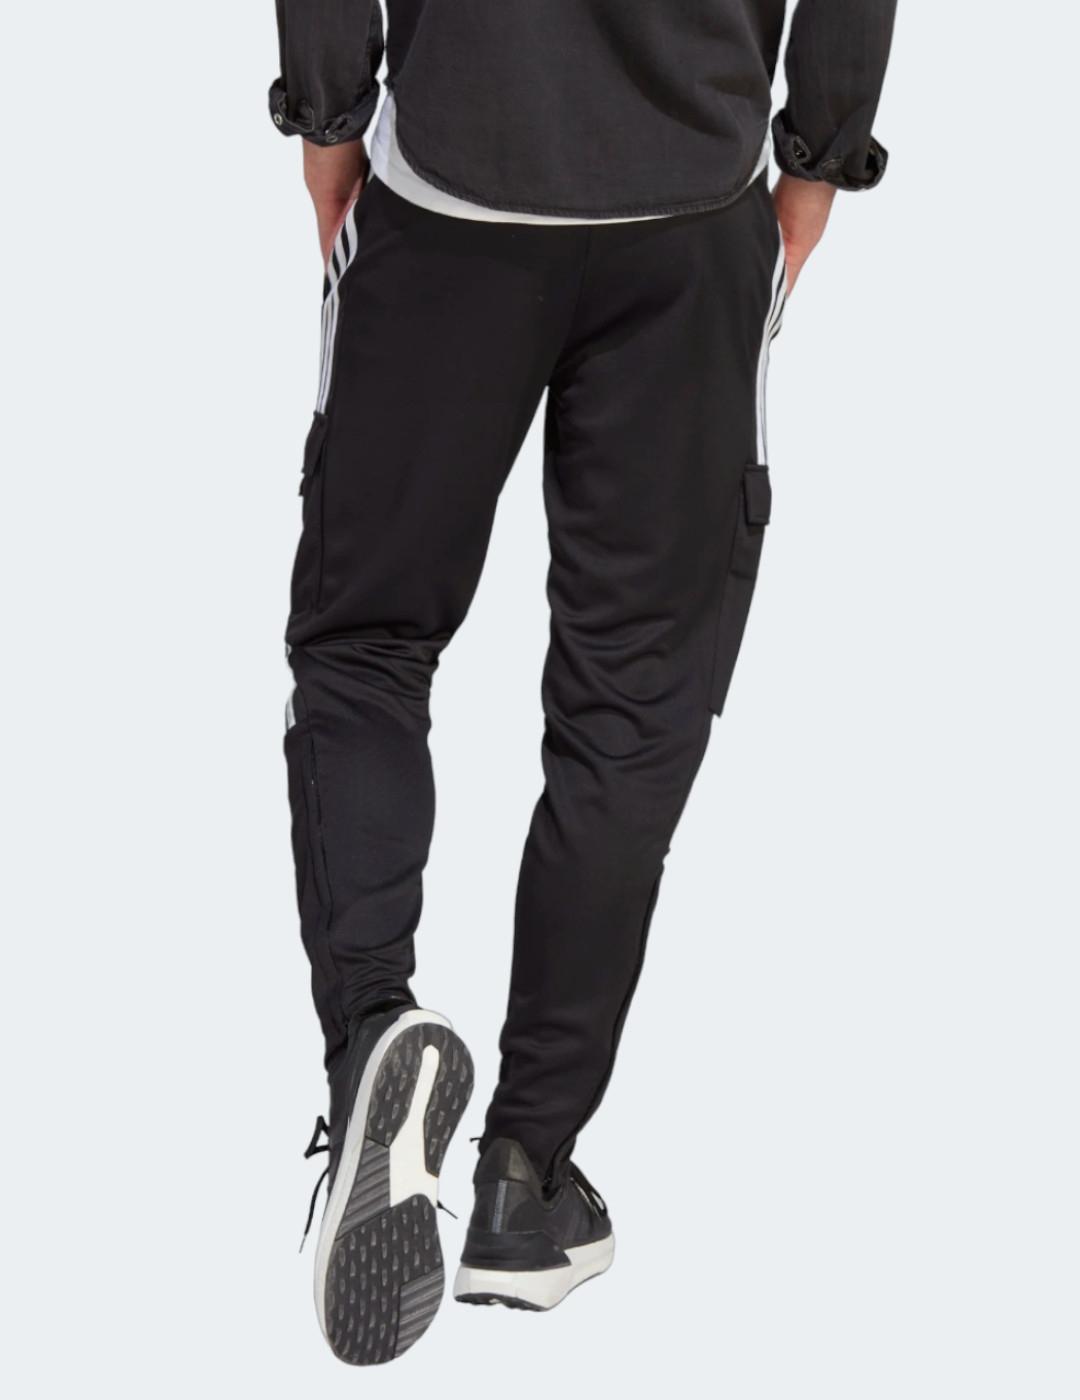 Pantalon Adidas jogger cargo negro unisex